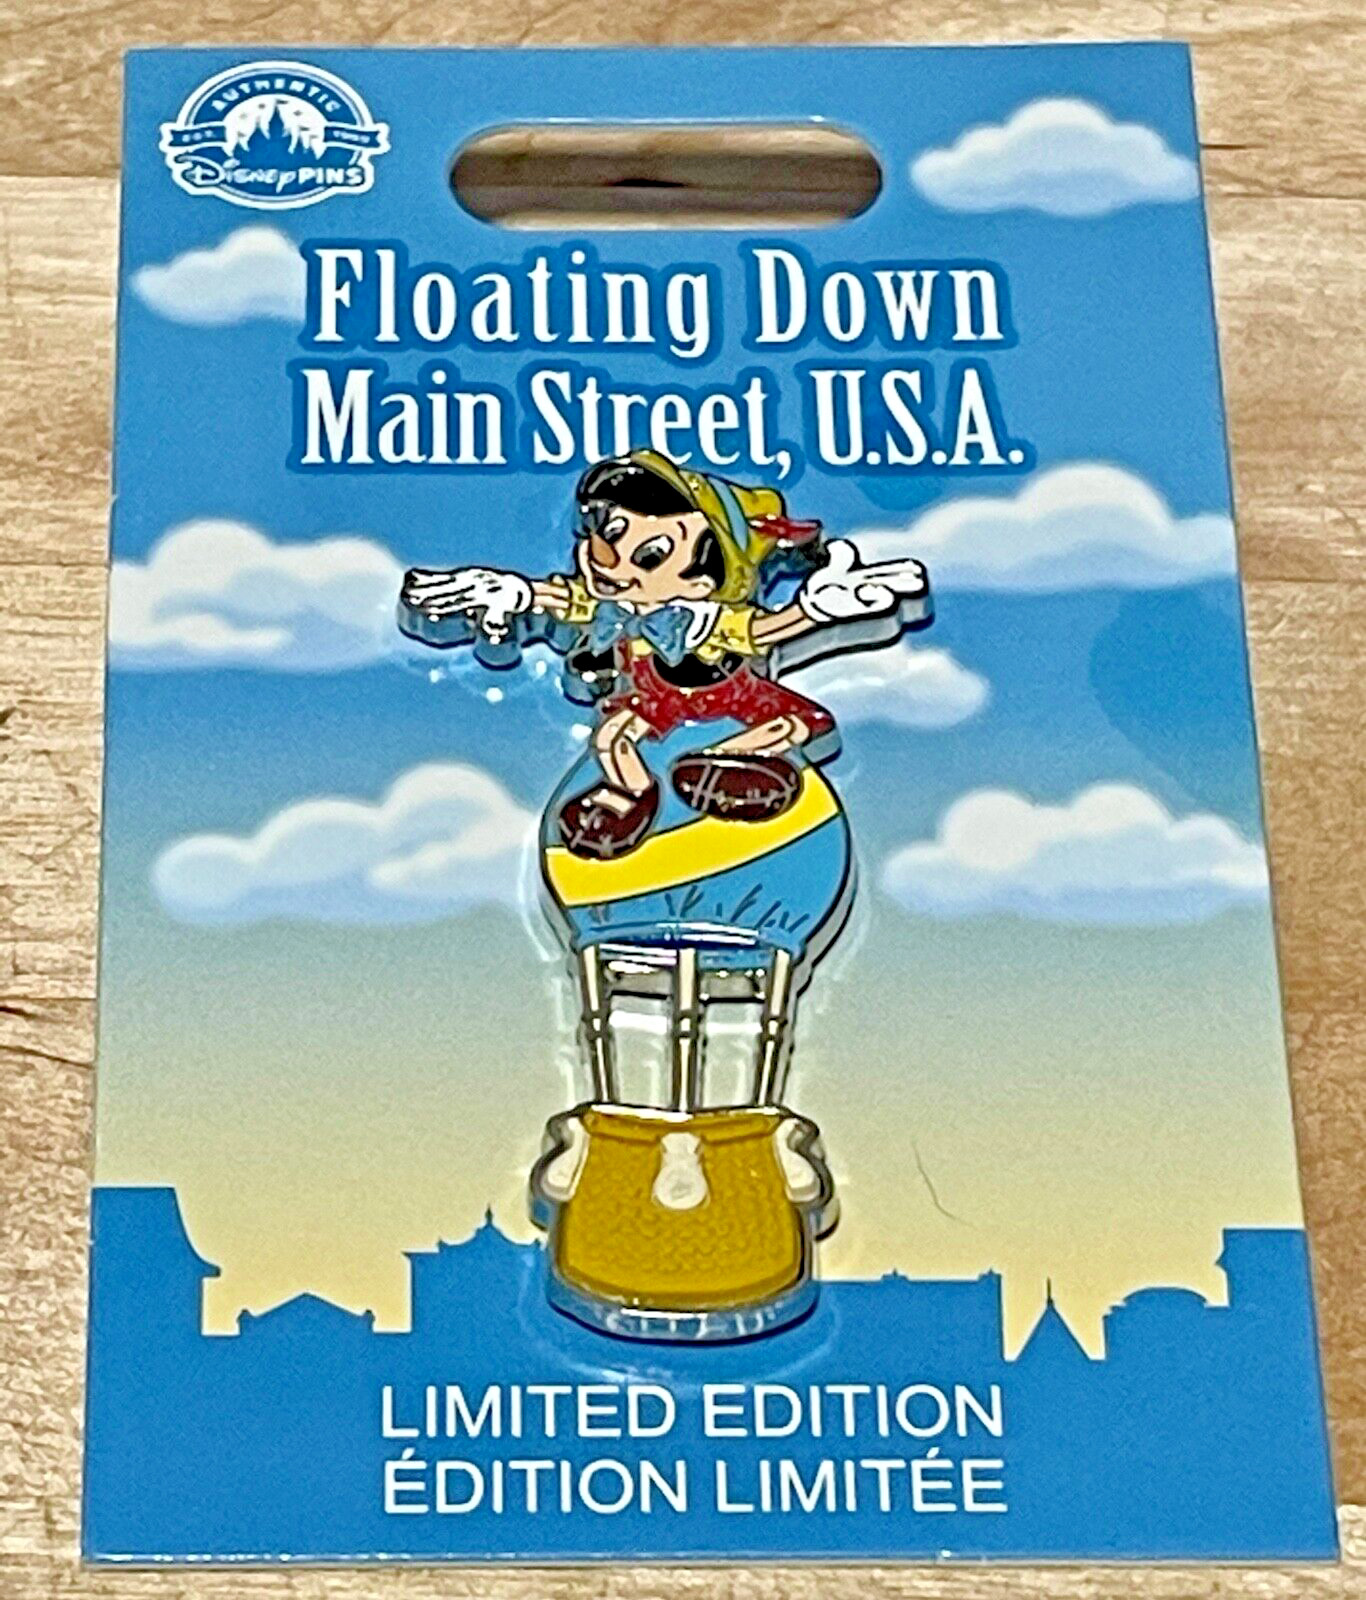 2022 Disney Parks Floating Down Main Street USA  Pinocchio LE Pin